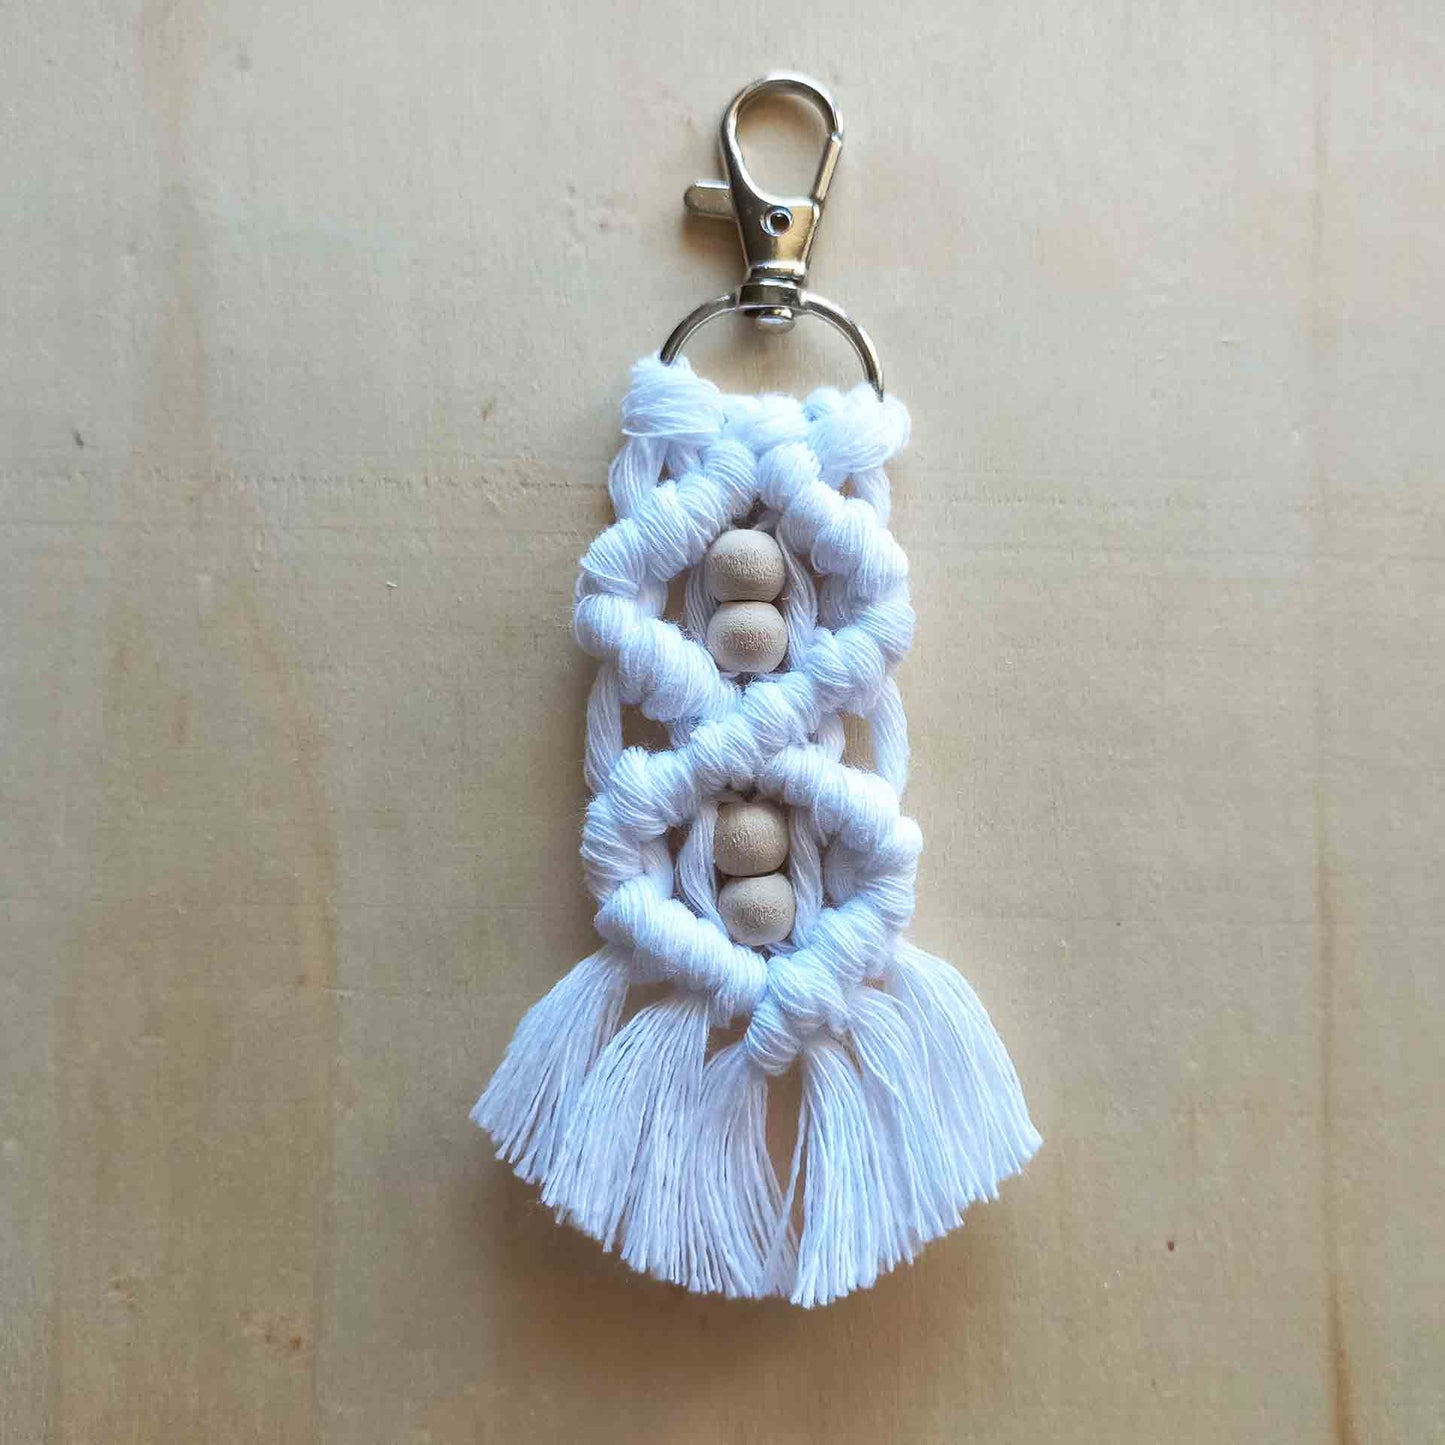 White Macrame Key Ring with Beads